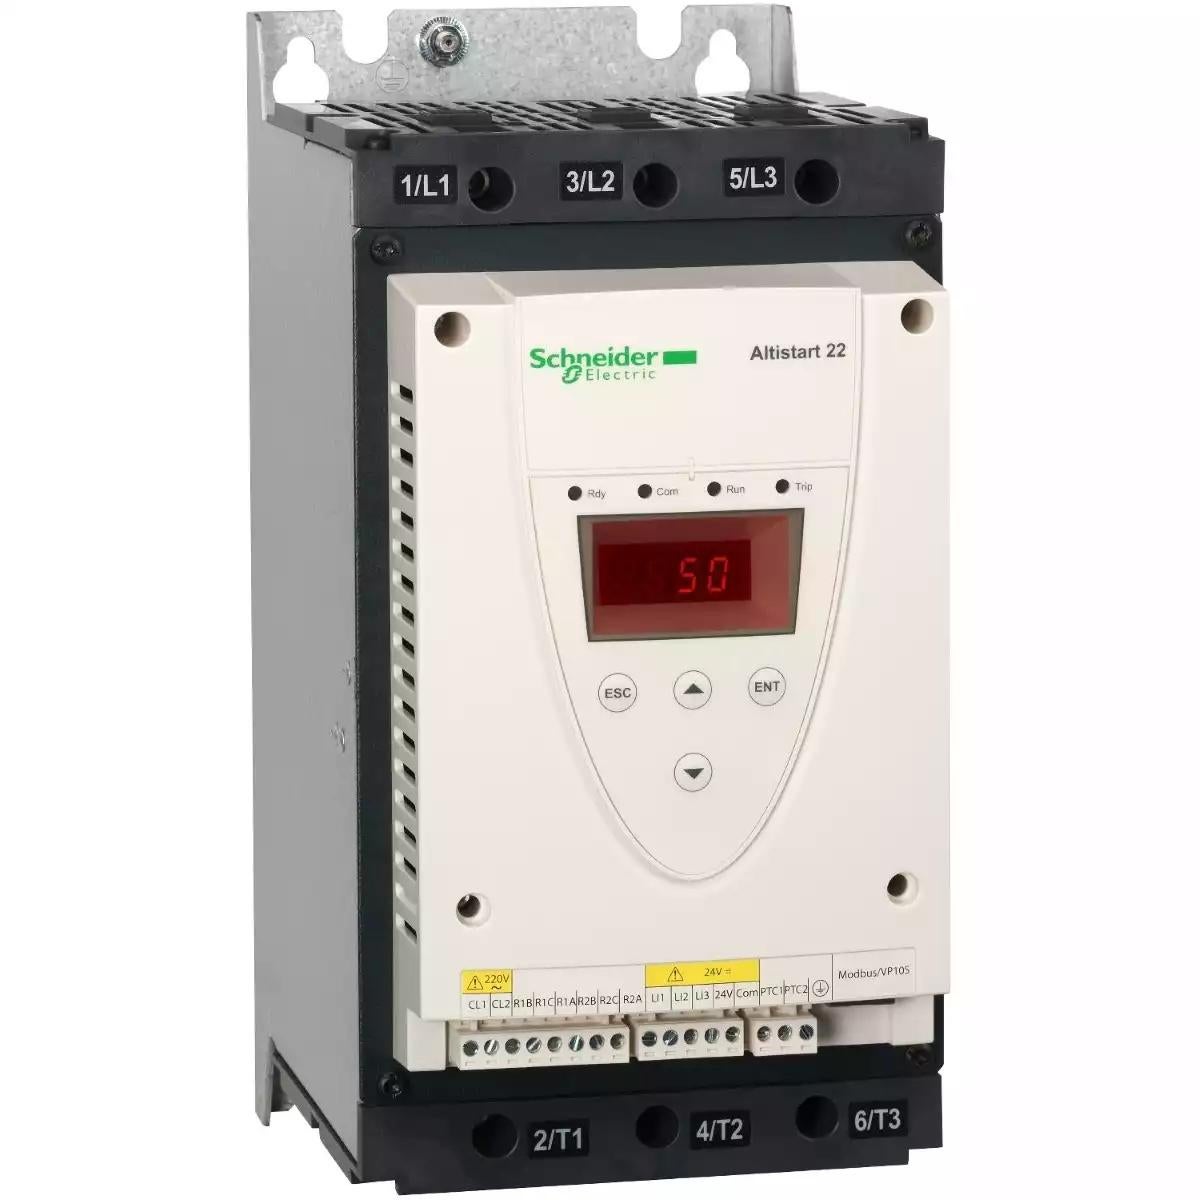 Schneider Electric Altistart 22 soft starter - ATS22 - control 220V-power 230V(15kW)/400...440V(30kW)